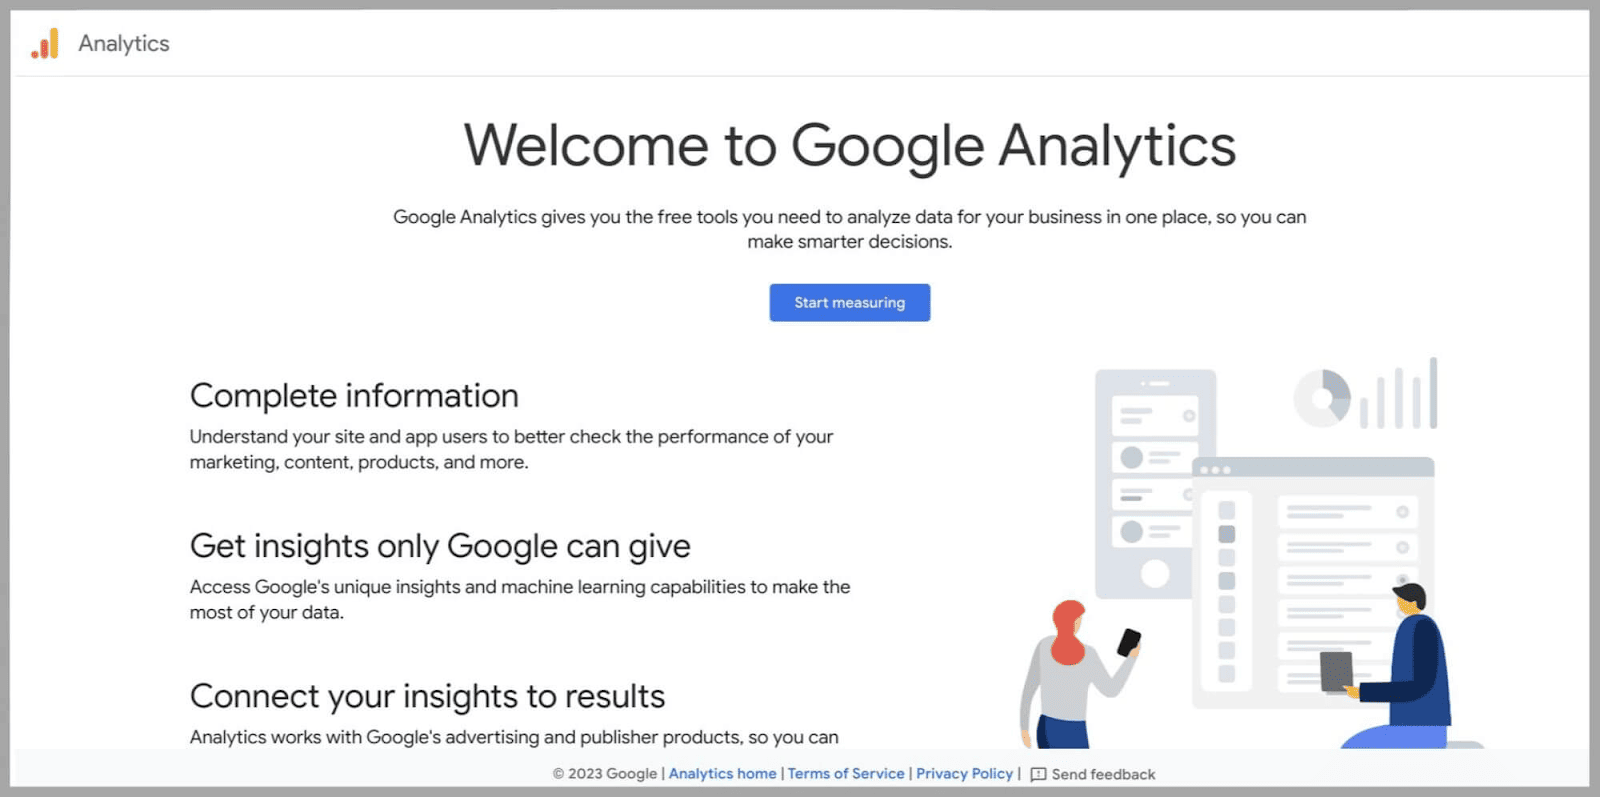 Introducing Google Analytics 4: The Next Generation Analytics Tool